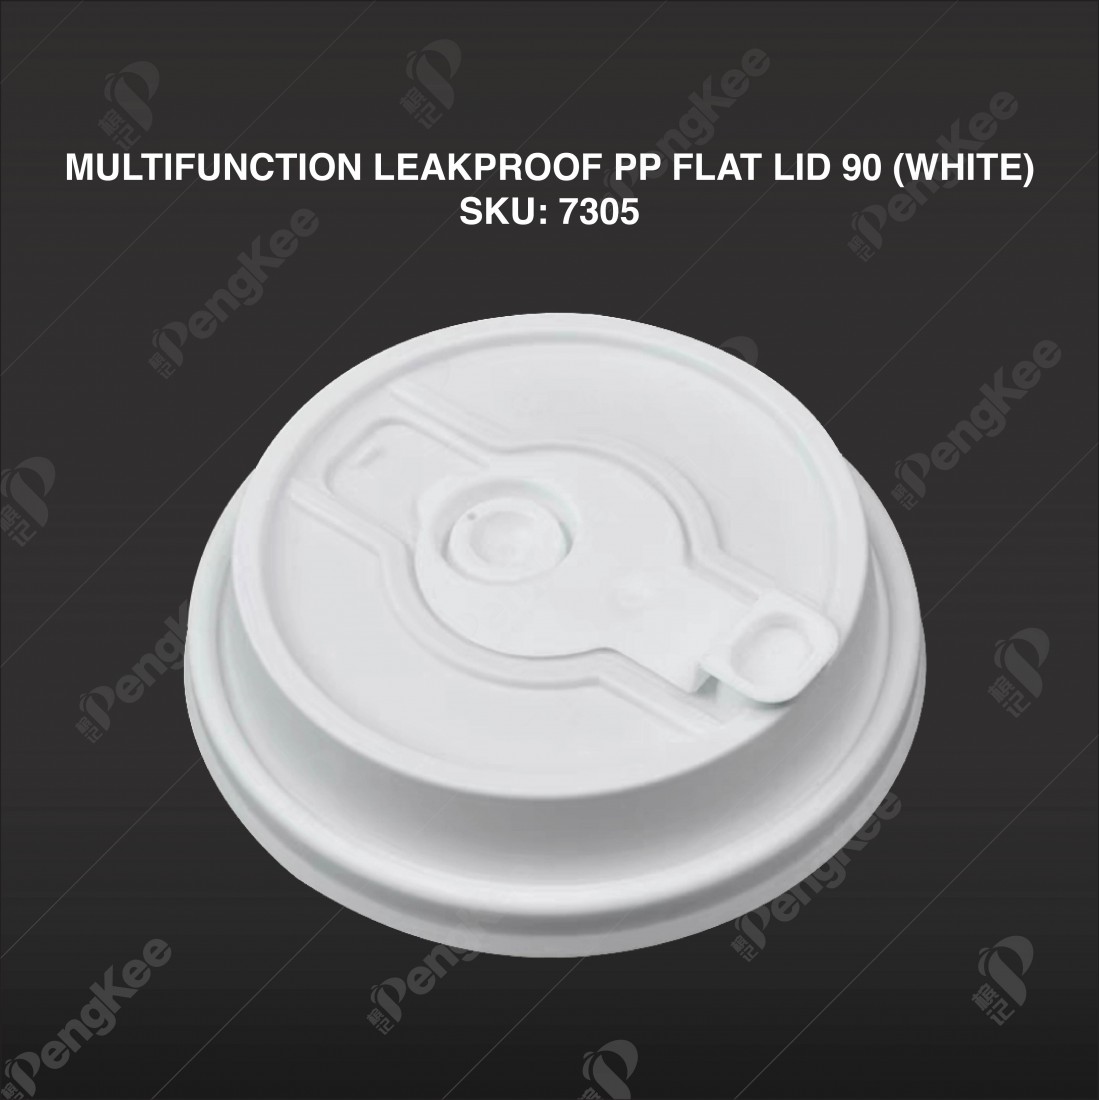 MULTIFUNCTION LEAKPROOF PP FLAT LID 90 (WHITE)